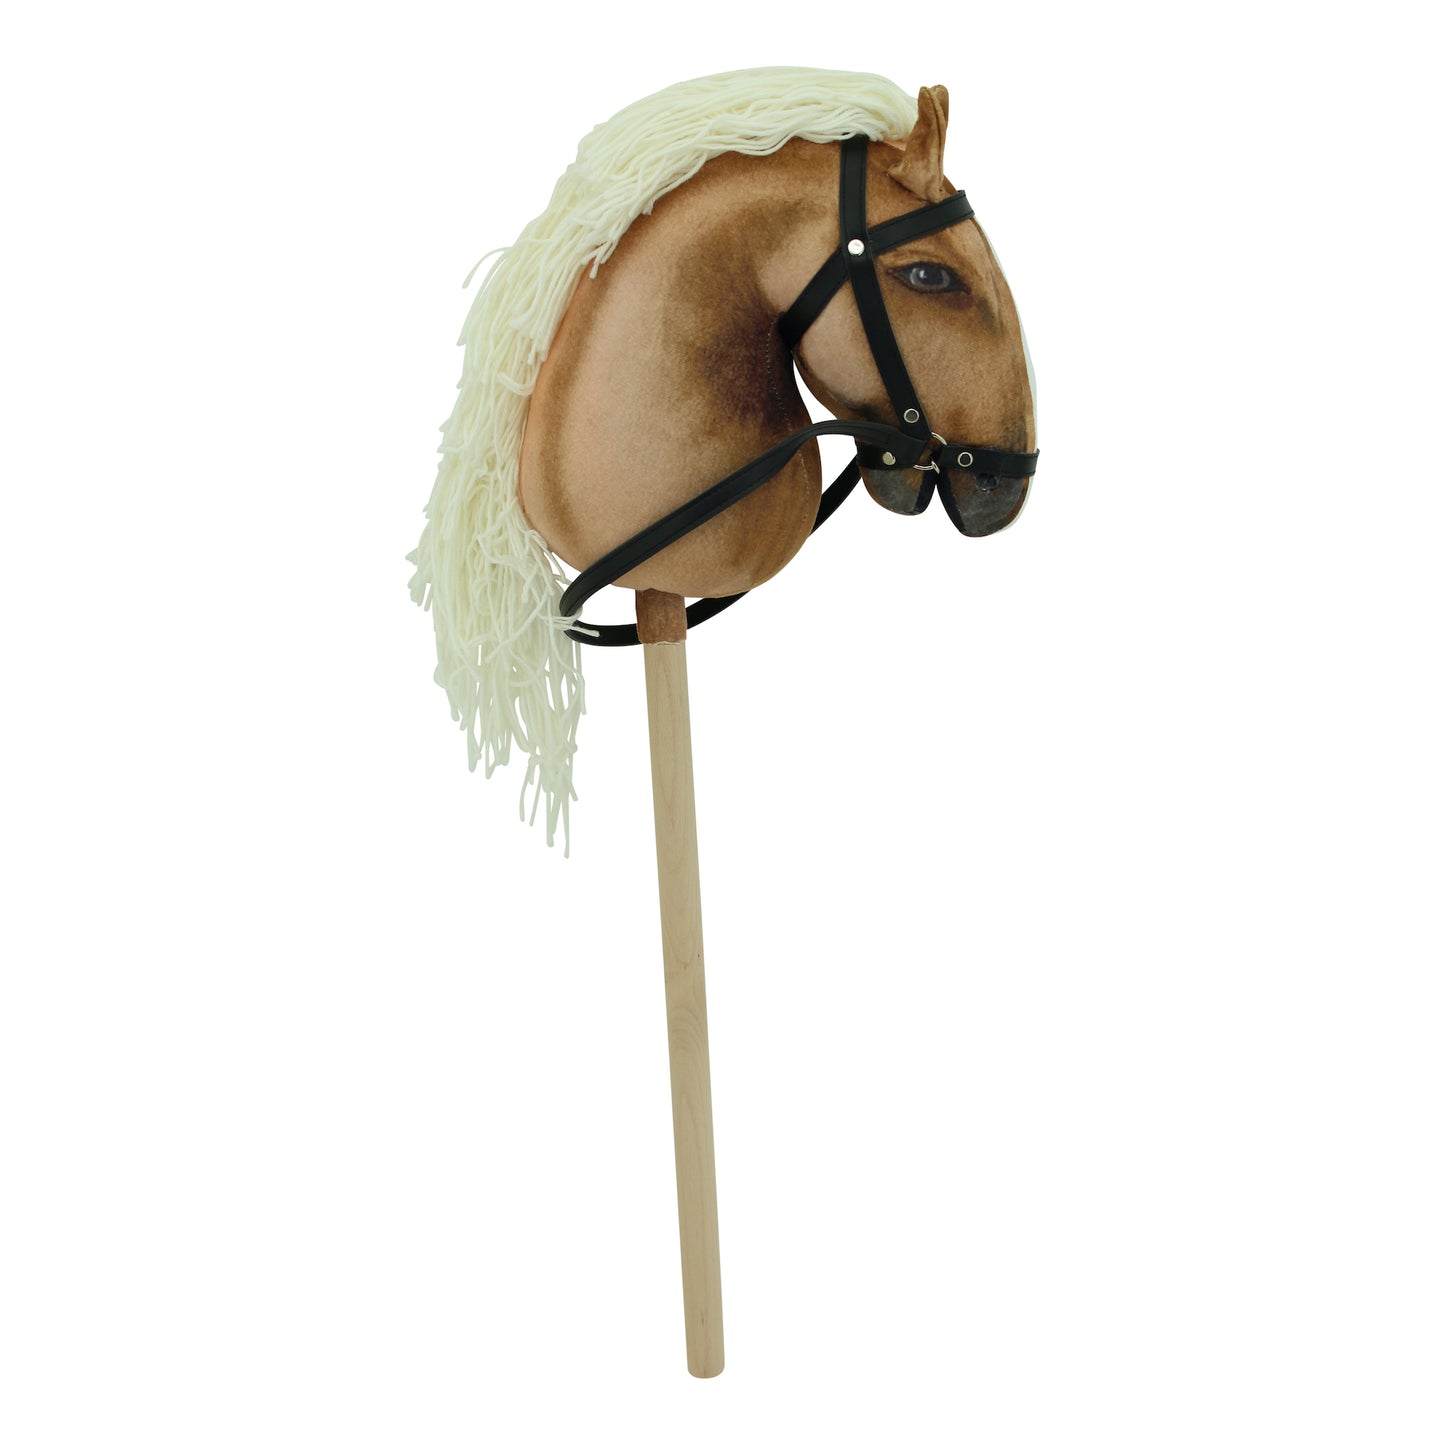 Sweety Toys 14248 Hobbyhorse Hobby horse senza ruote adatto per tornei di hobbistica